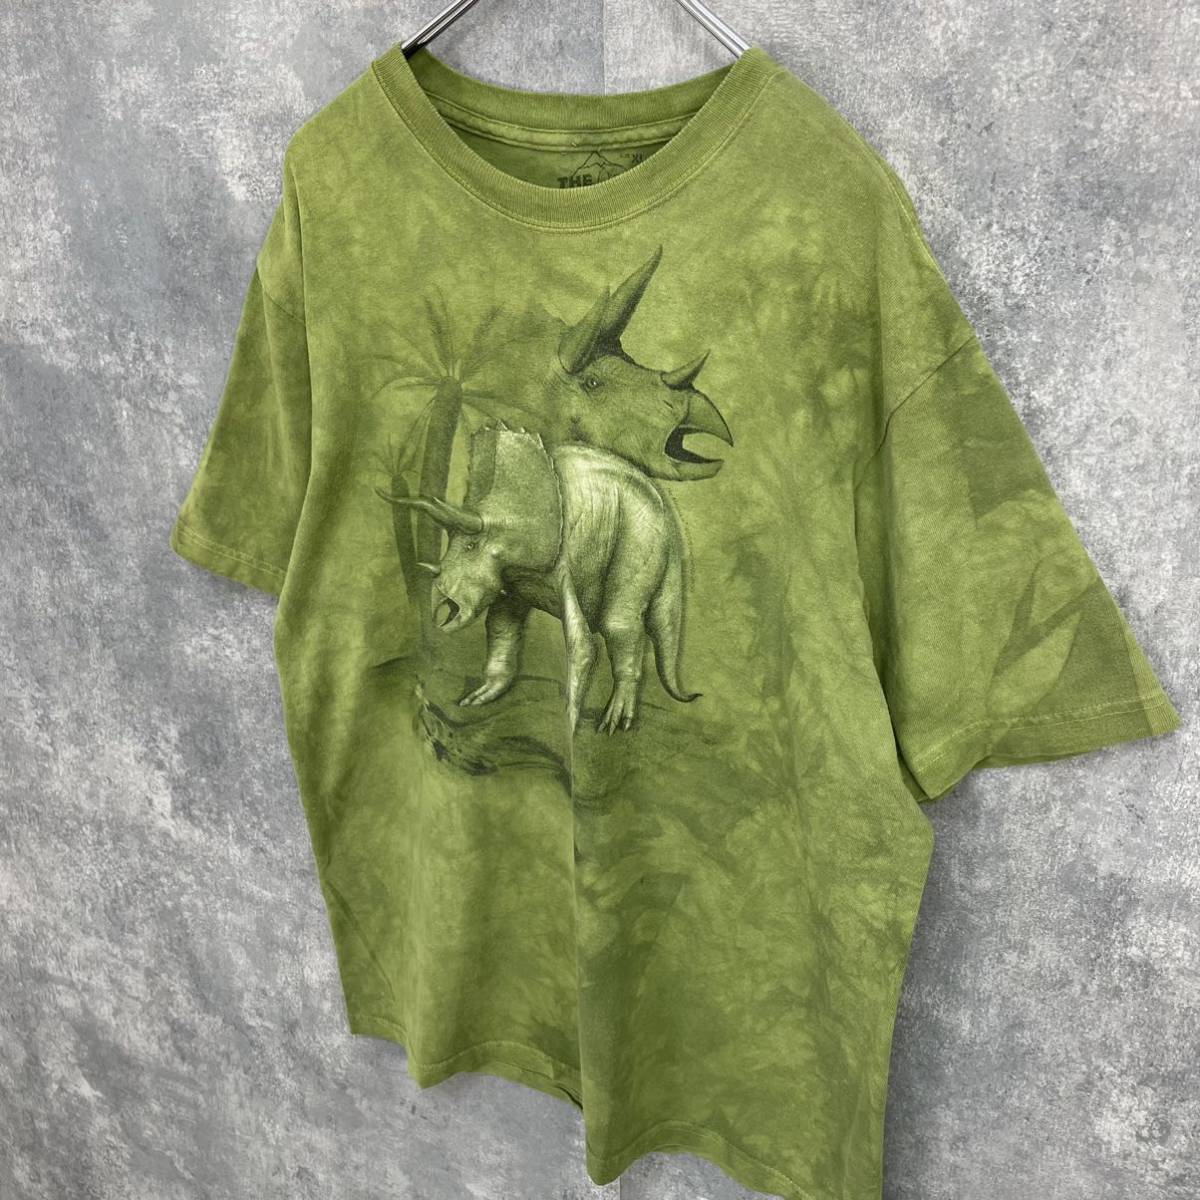 USA製 THE MOUNTAIN ザマウンテン 恐竜柄 タイダイ 半袖Tシャツ